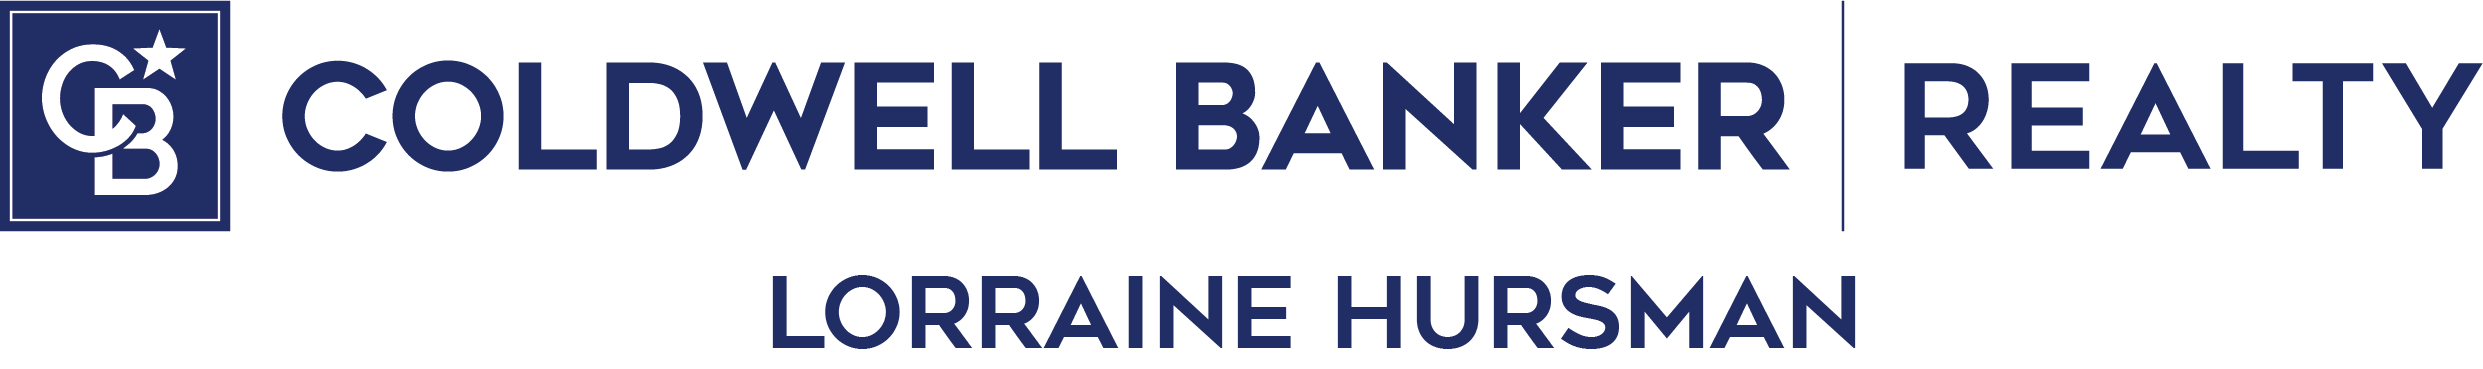 Coldwell Banker Realty - Lorraine Hursman Logo